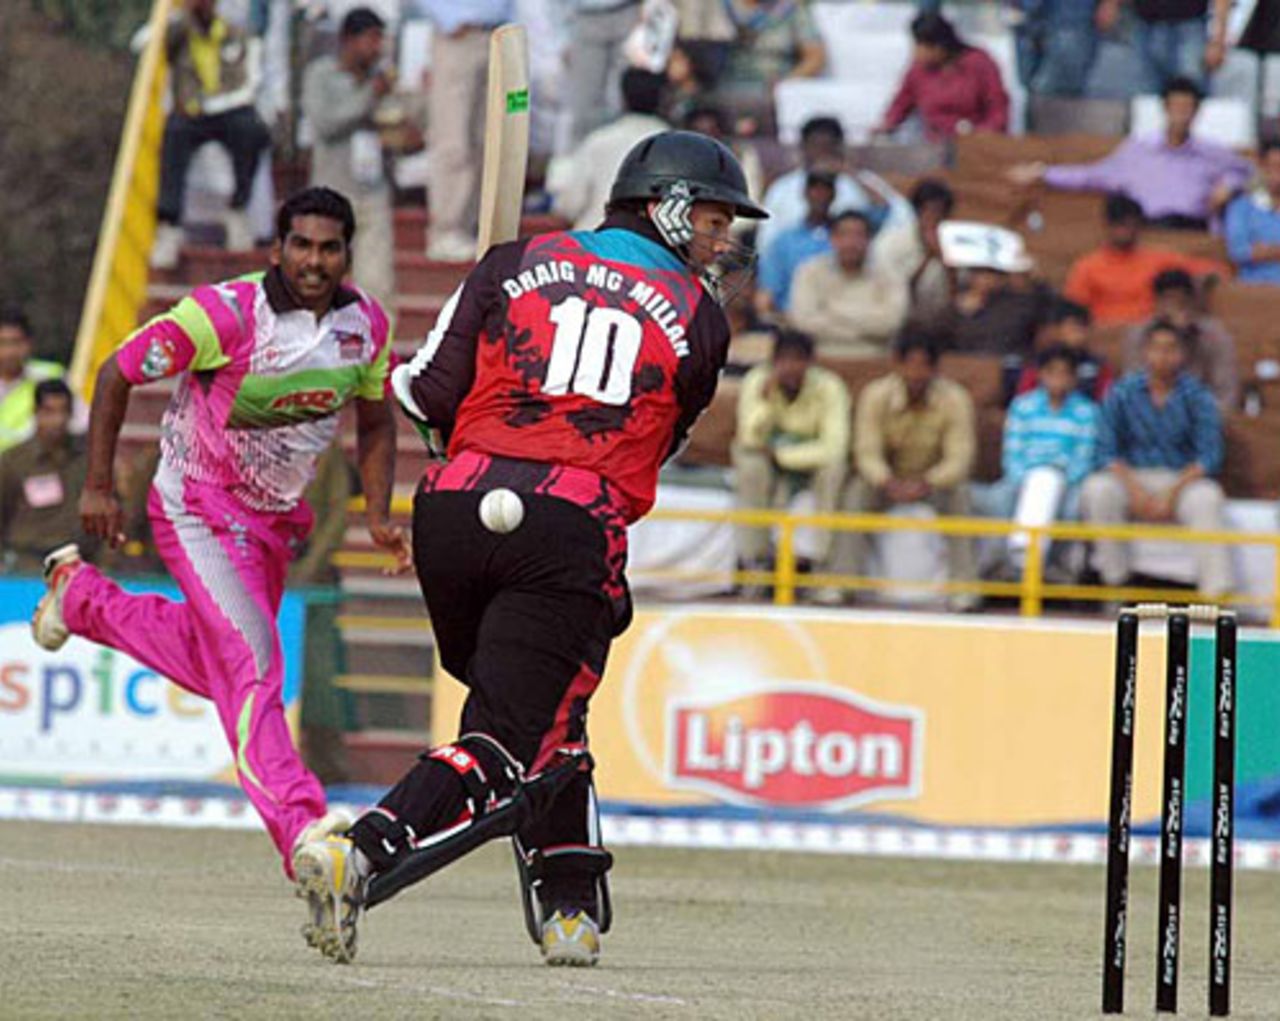 Craig McMillan inside-edges the ball to behind the wicket, Chennai Superstars v Kolkata Tigers, Indian Cricket League, December 1, 2007